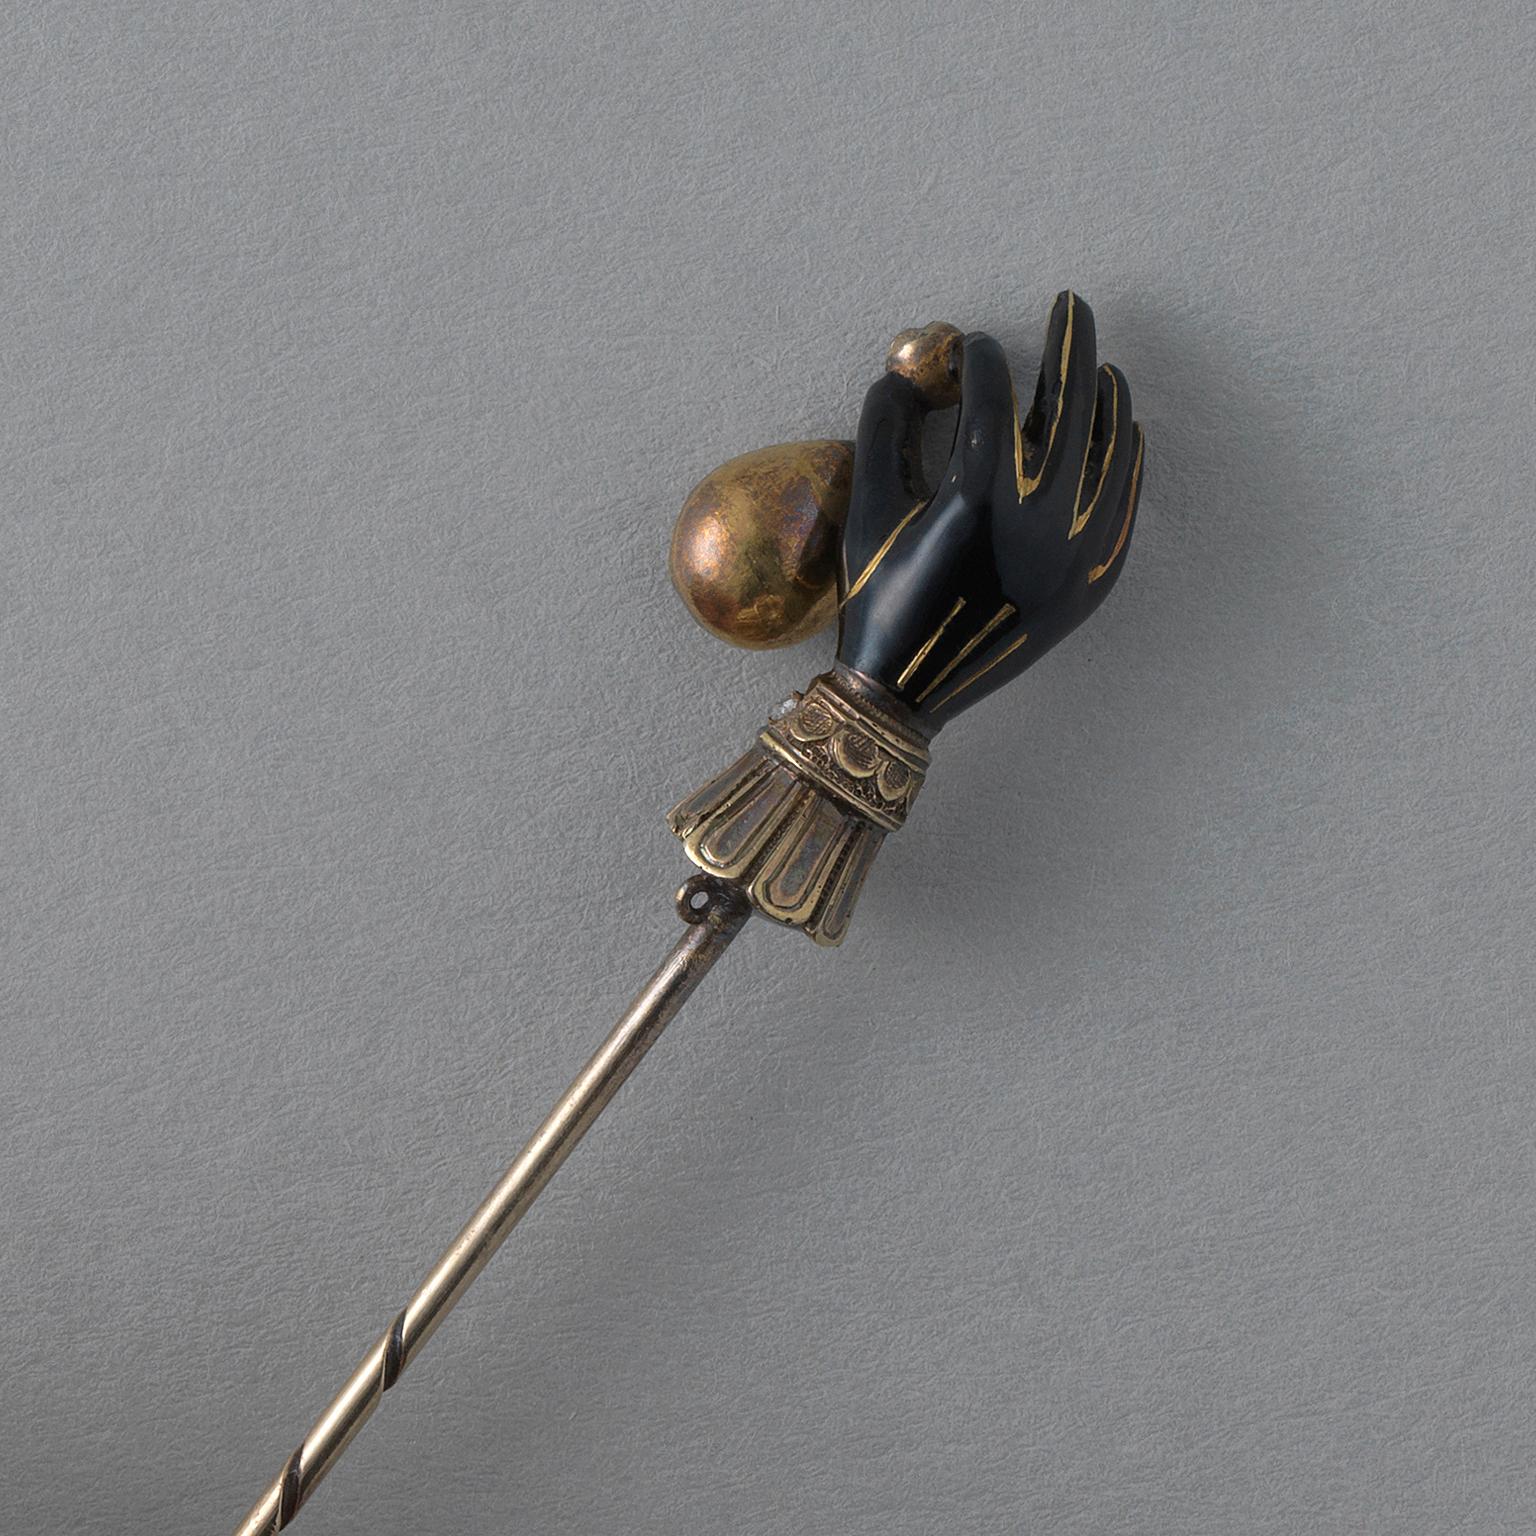 Renaissance Revival Gold and Silver Gloved Black Enamel Hand Stickpin Holding a Rose Cut Diamond